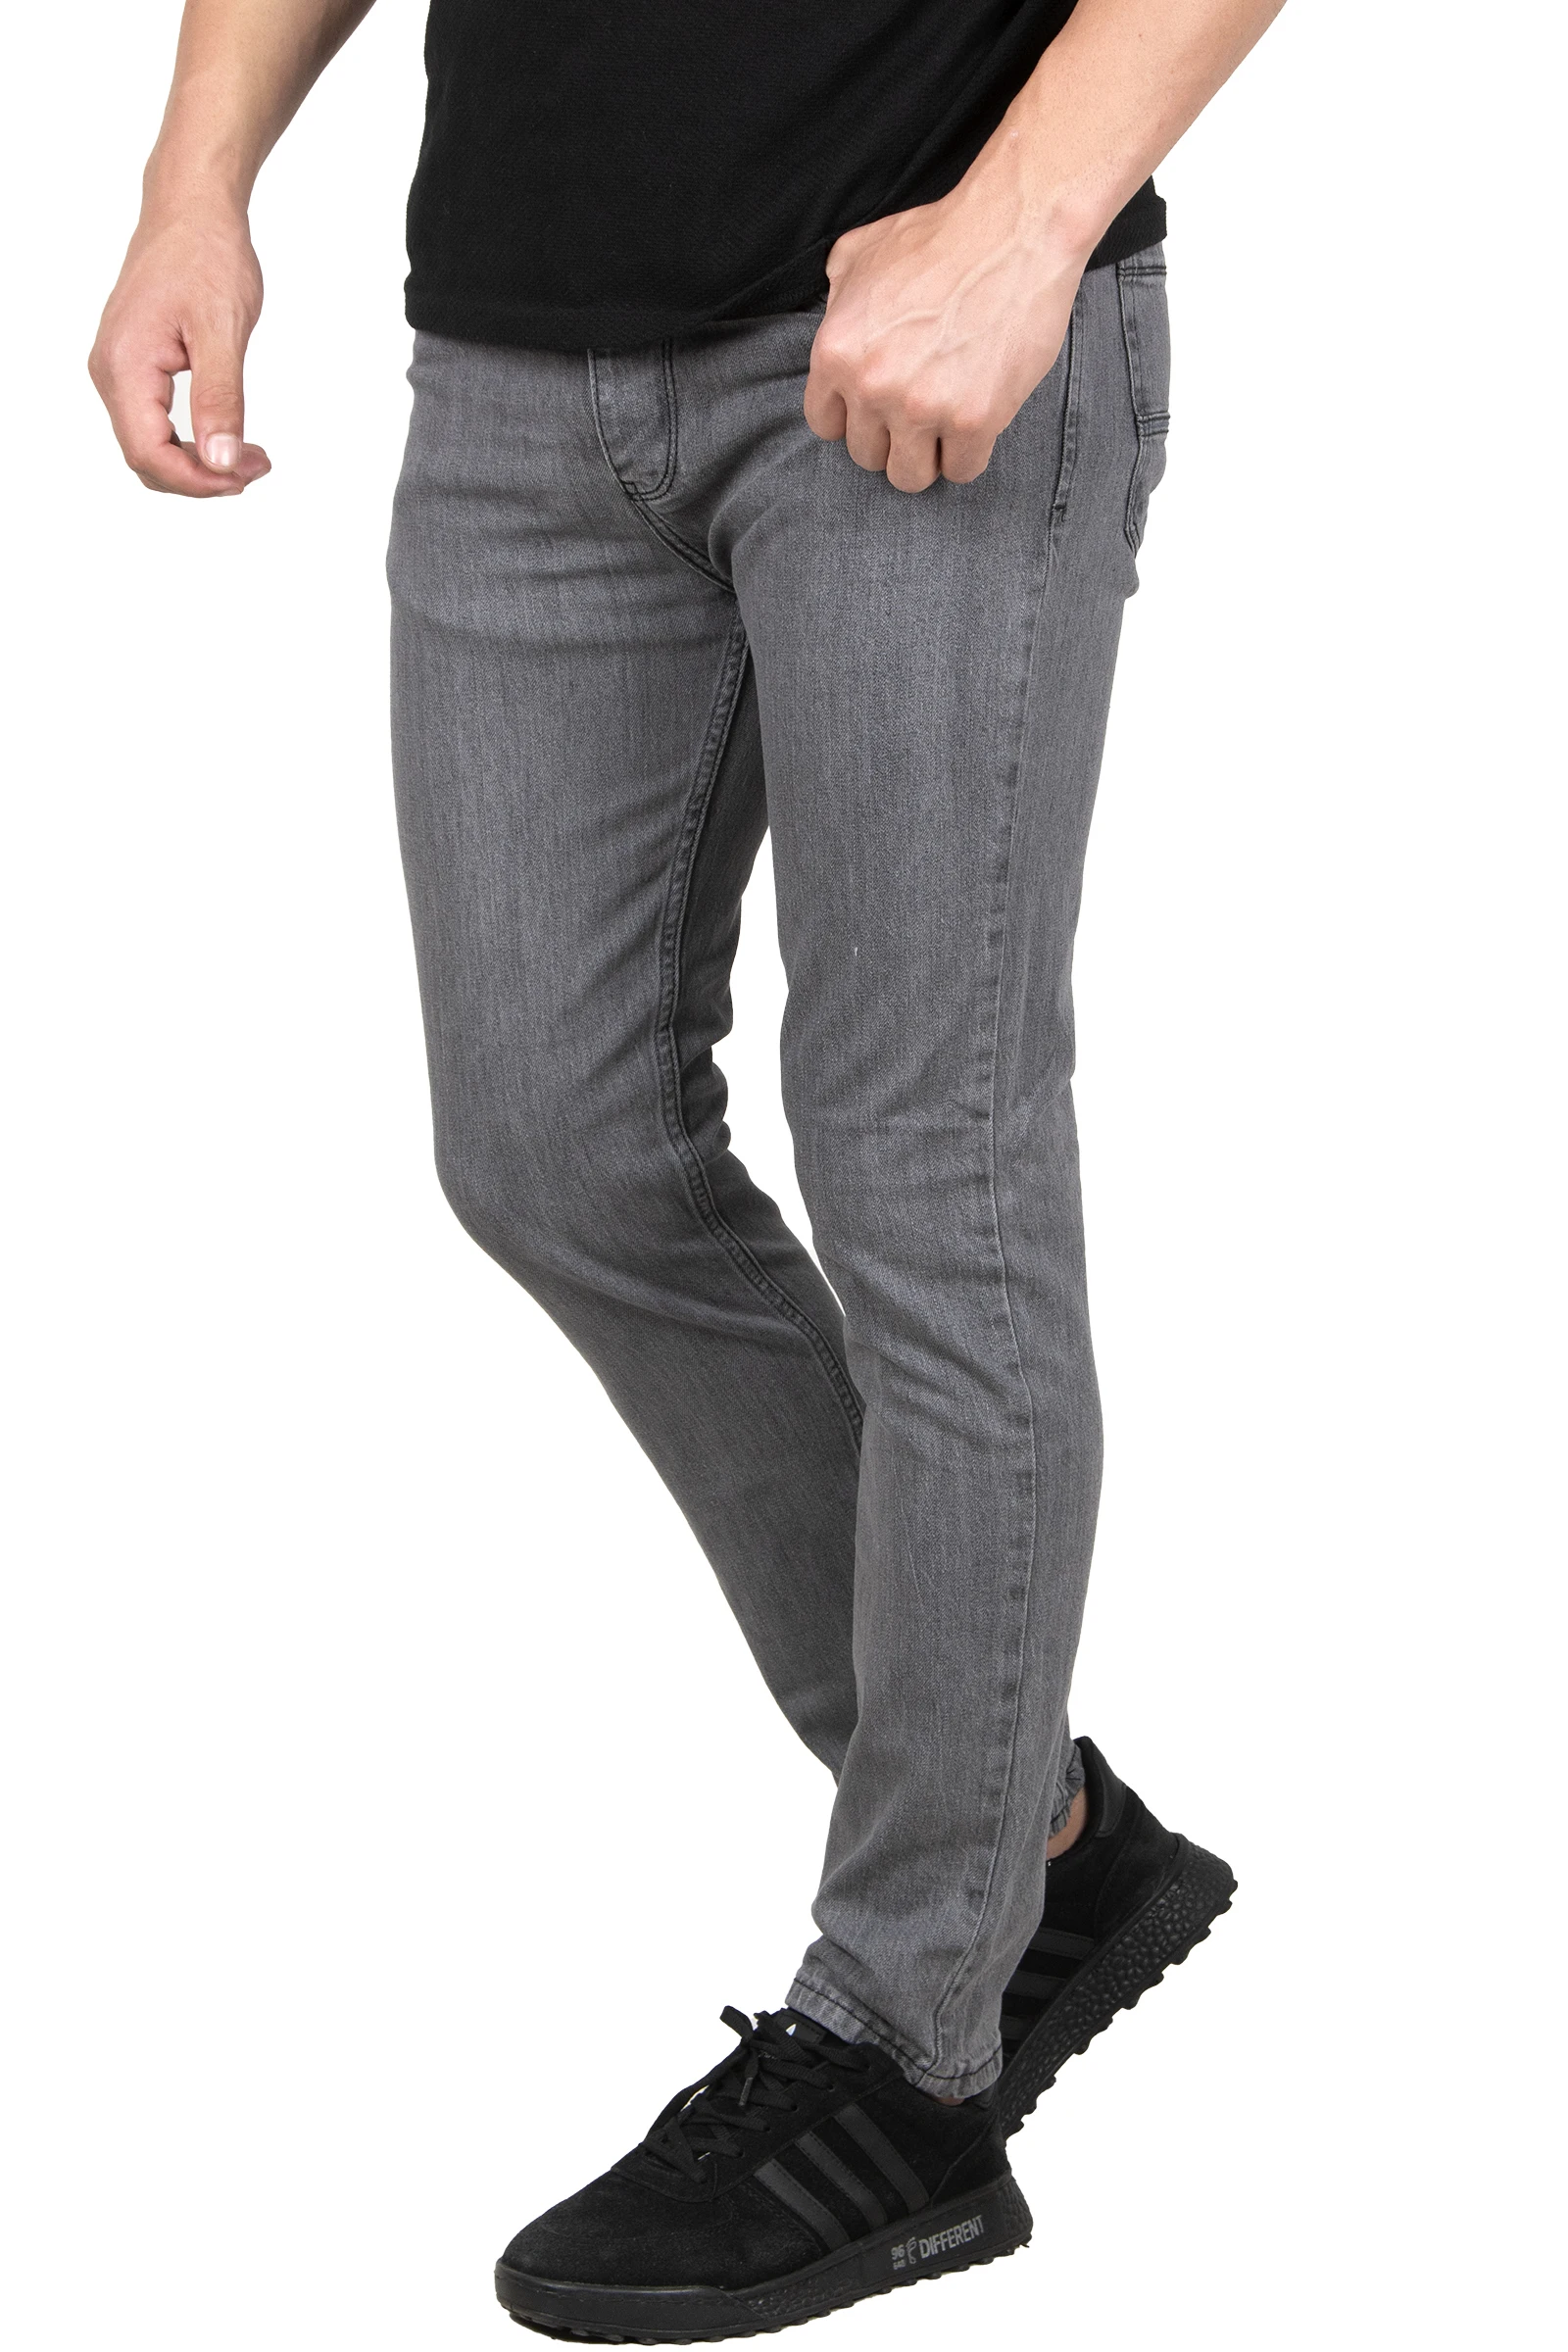 

DeepSEA New Season Narrow Cut Lycra Back Pocket Jeans Pants 2301869